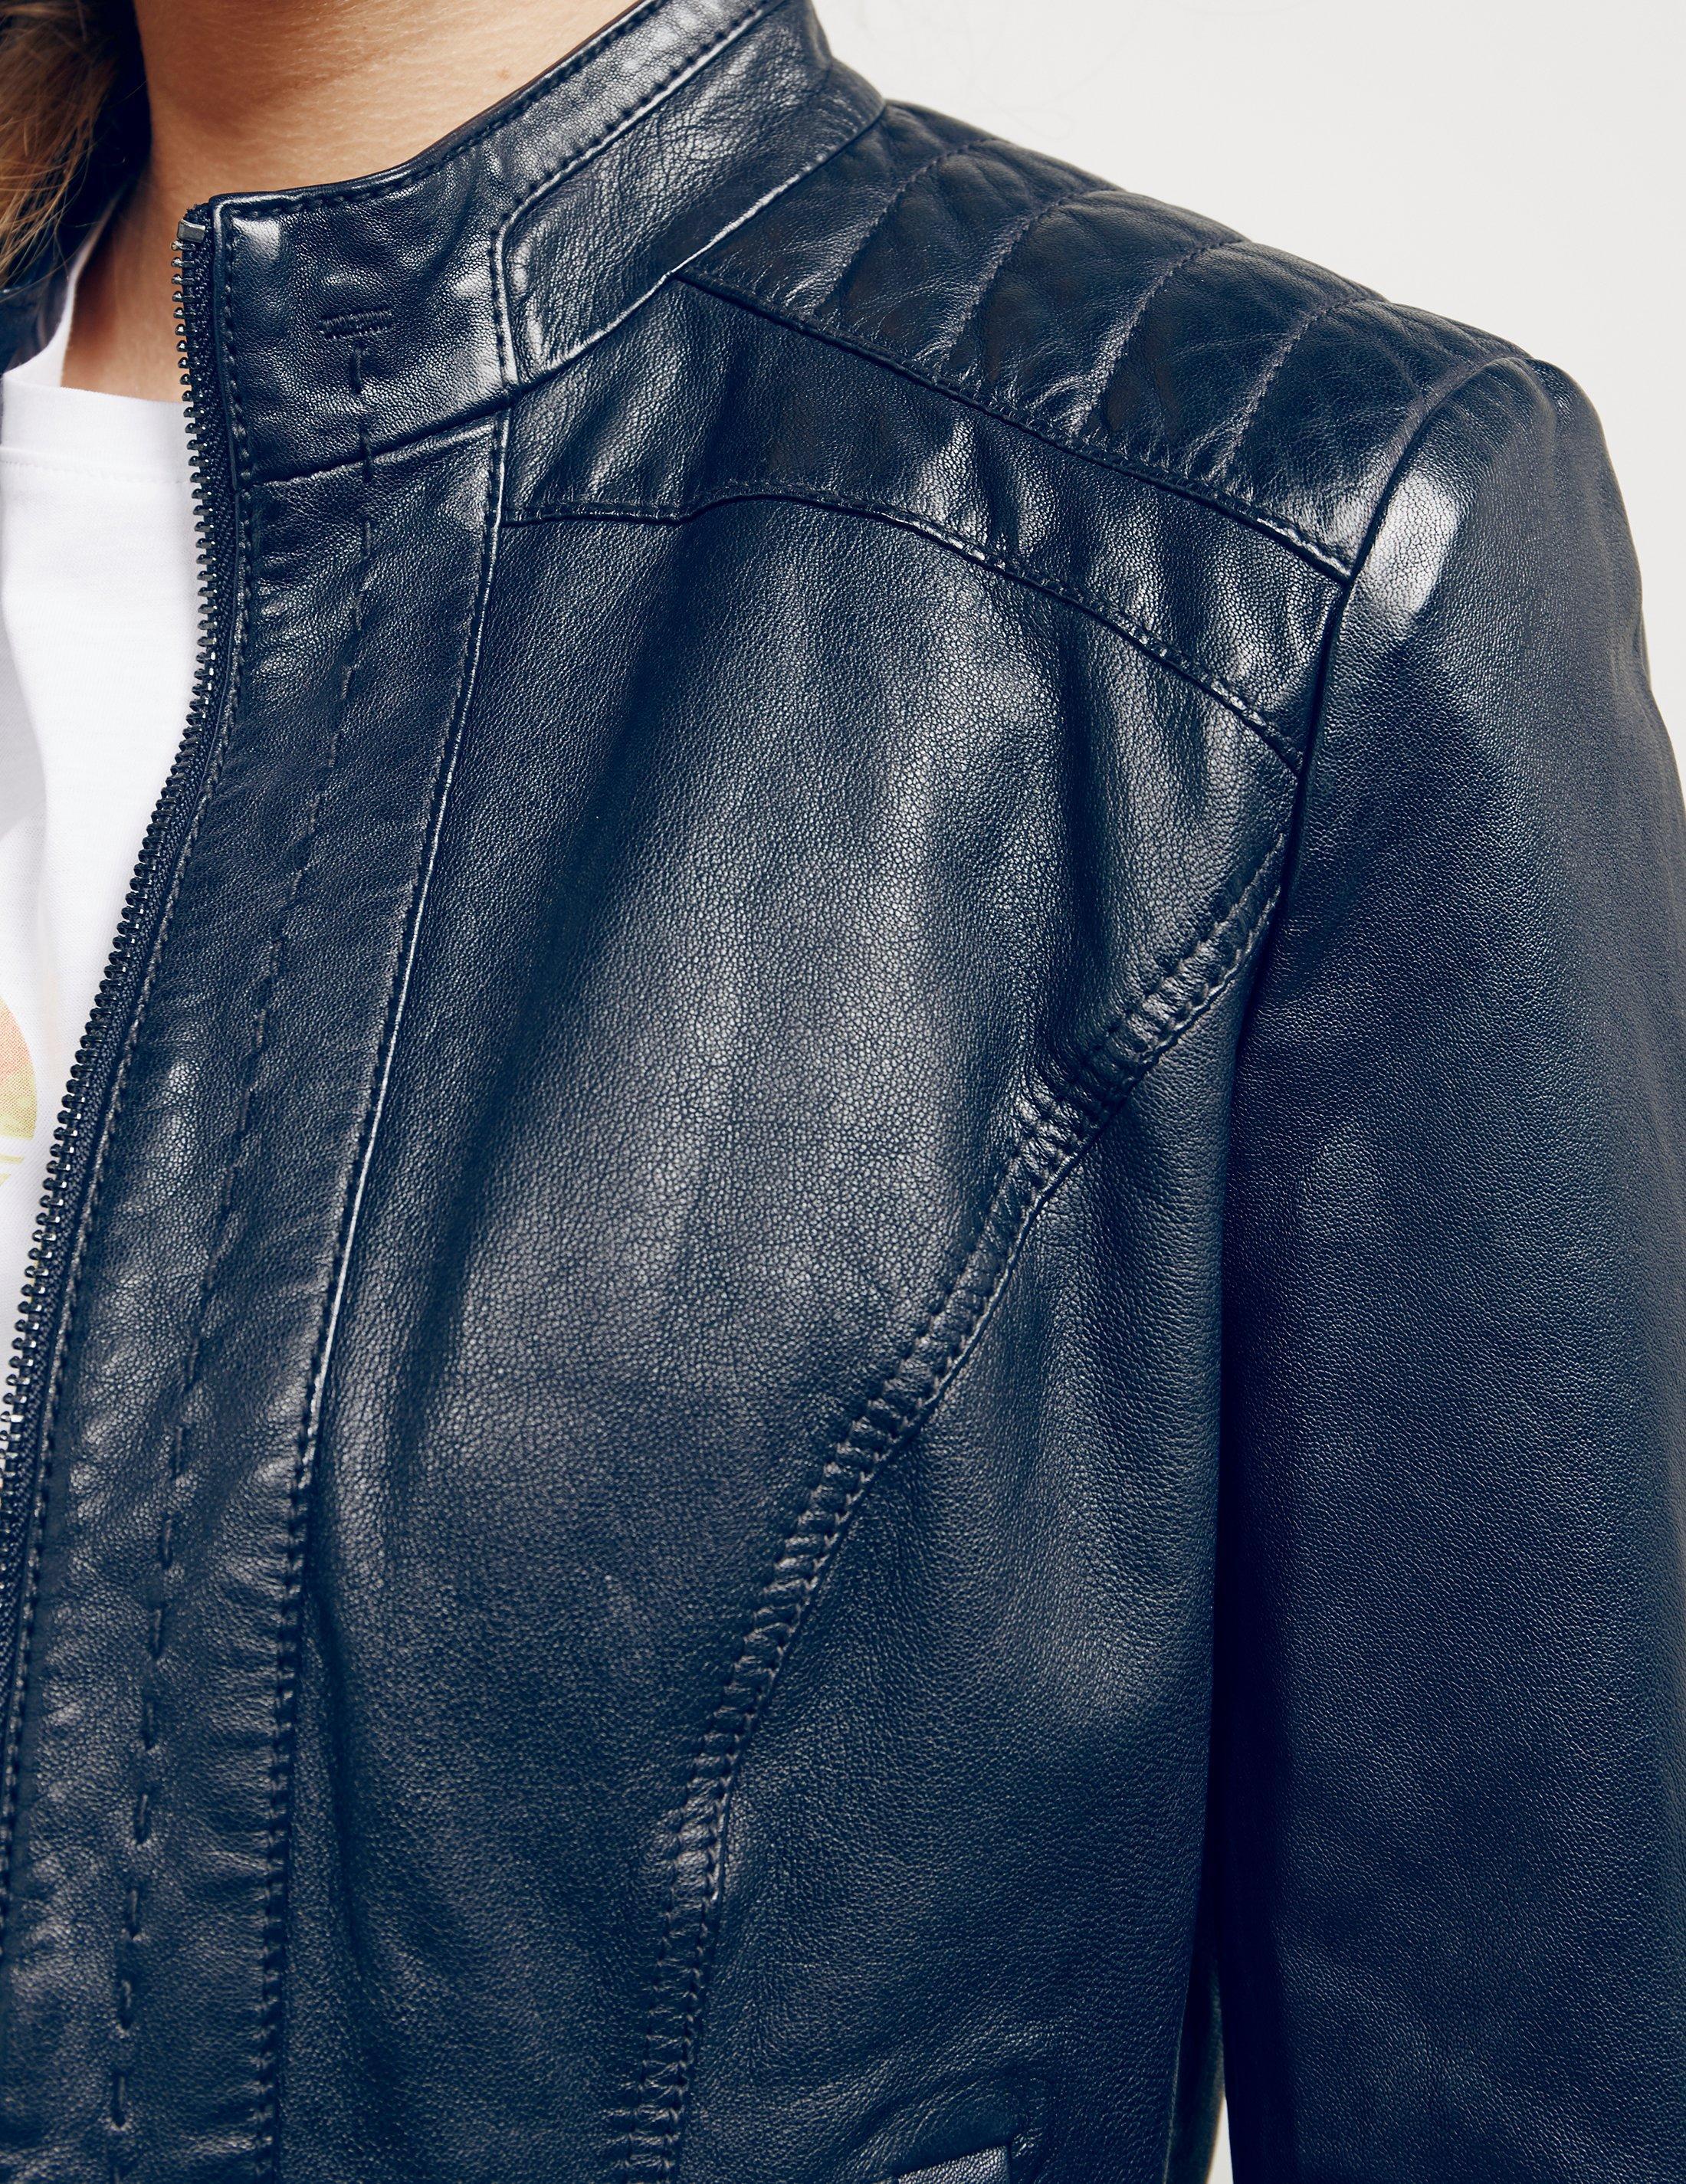 BOSS by HUGO BOSS Womens Janabelle Leather Jacket - Online Exclusive Navy  Blue - Lyst